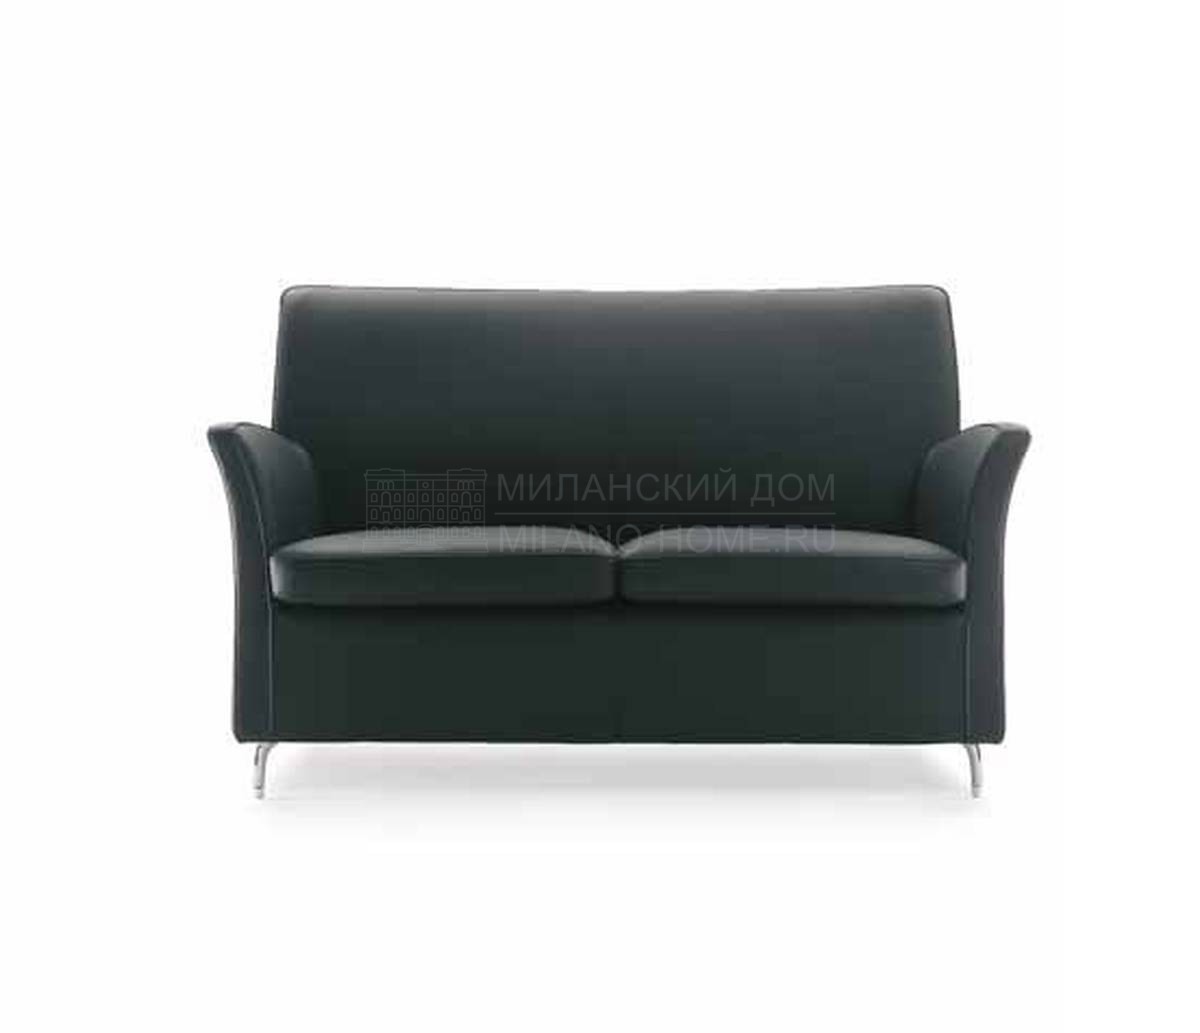 Прямой диван Hampton/sofa из Италии фабрики GIULIO MARELLI